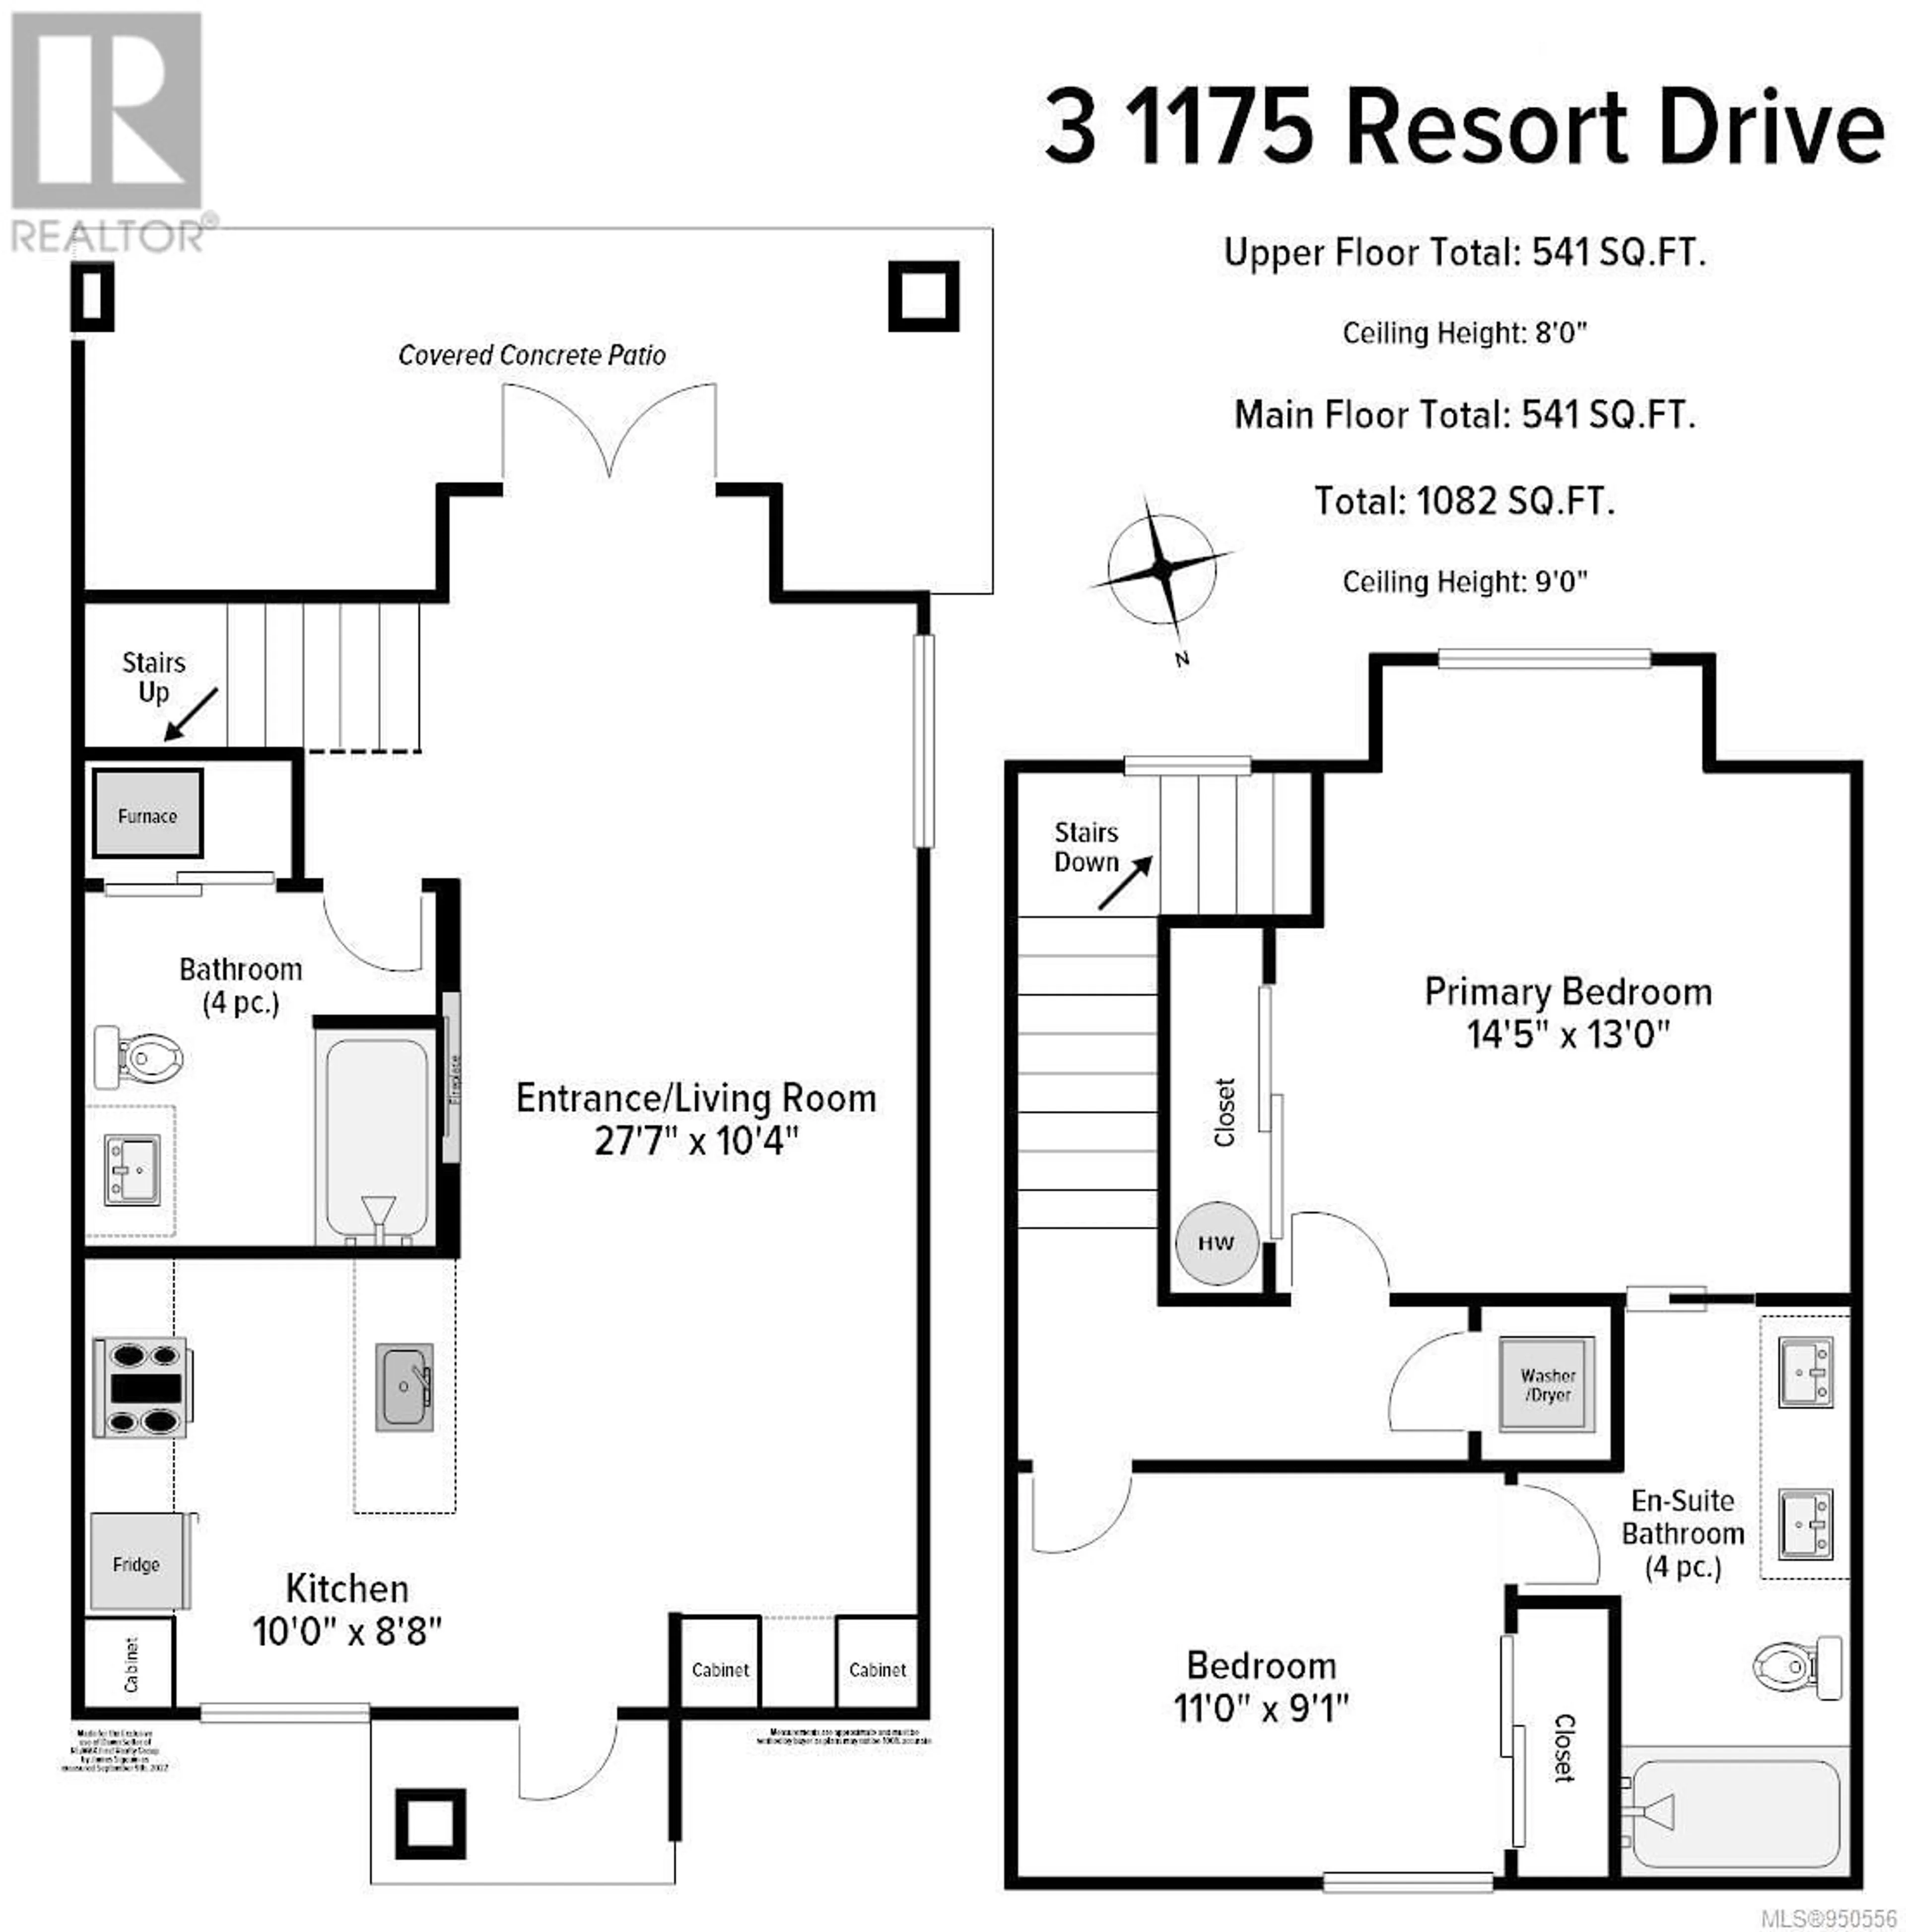 Floor plan for 3 1175 Resort Dr, Parksville British Columbia V9P2E3